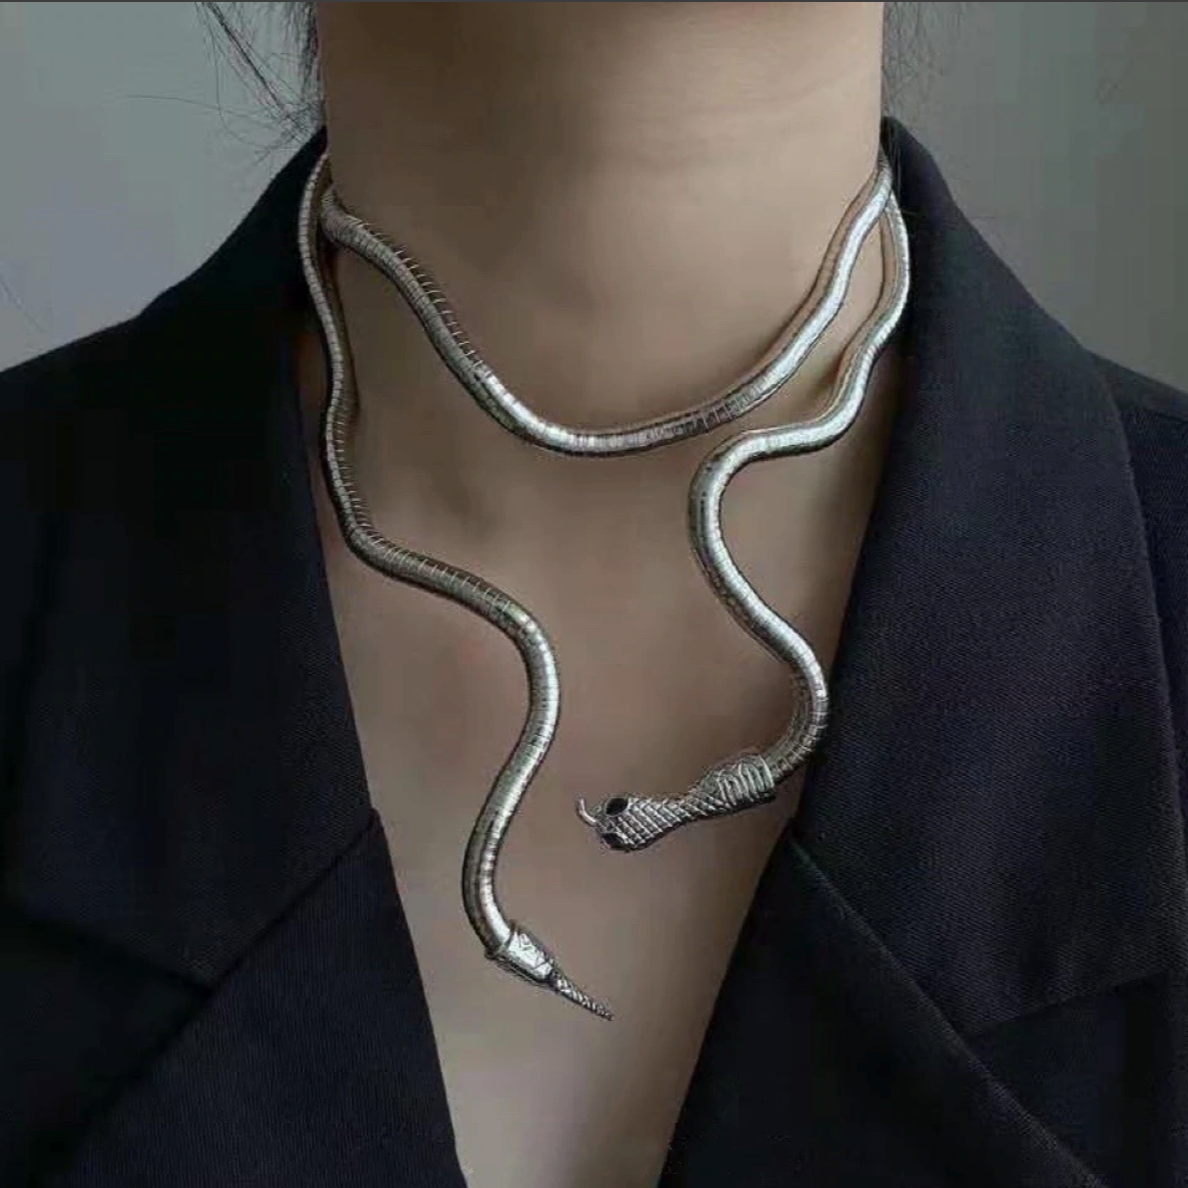 2dadoll Medusa flexible necklace